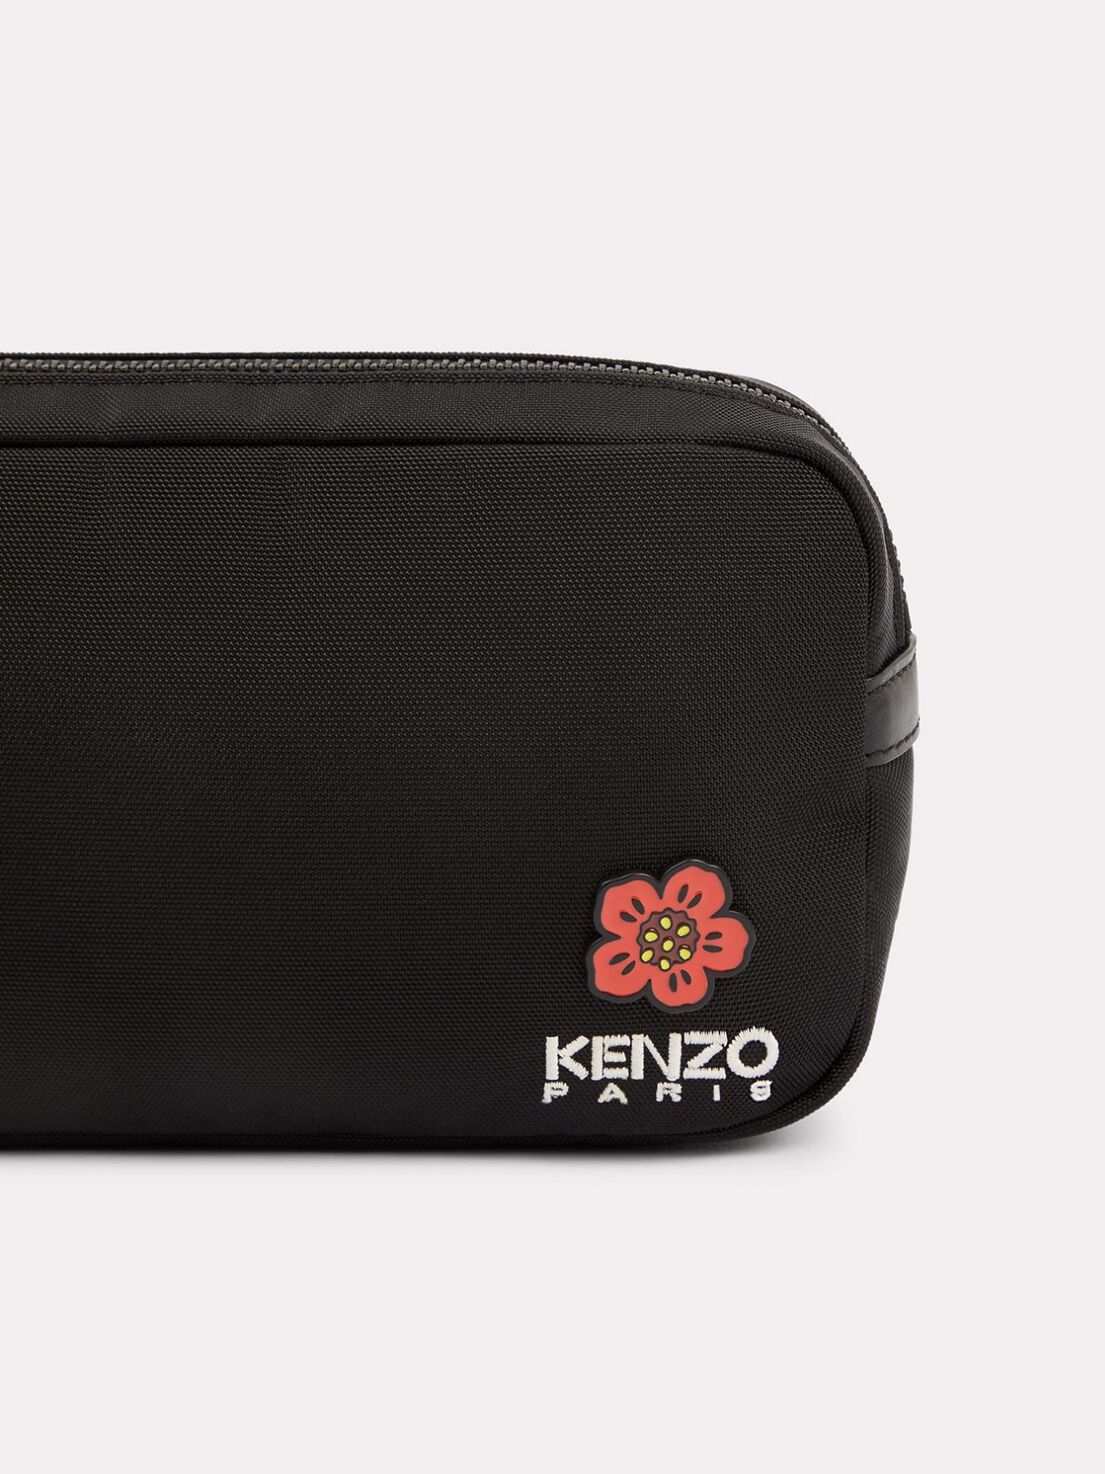 KENZO - 【ラスト1点】 Kenzo Crest Boke Flower Crossbody / ボディ 